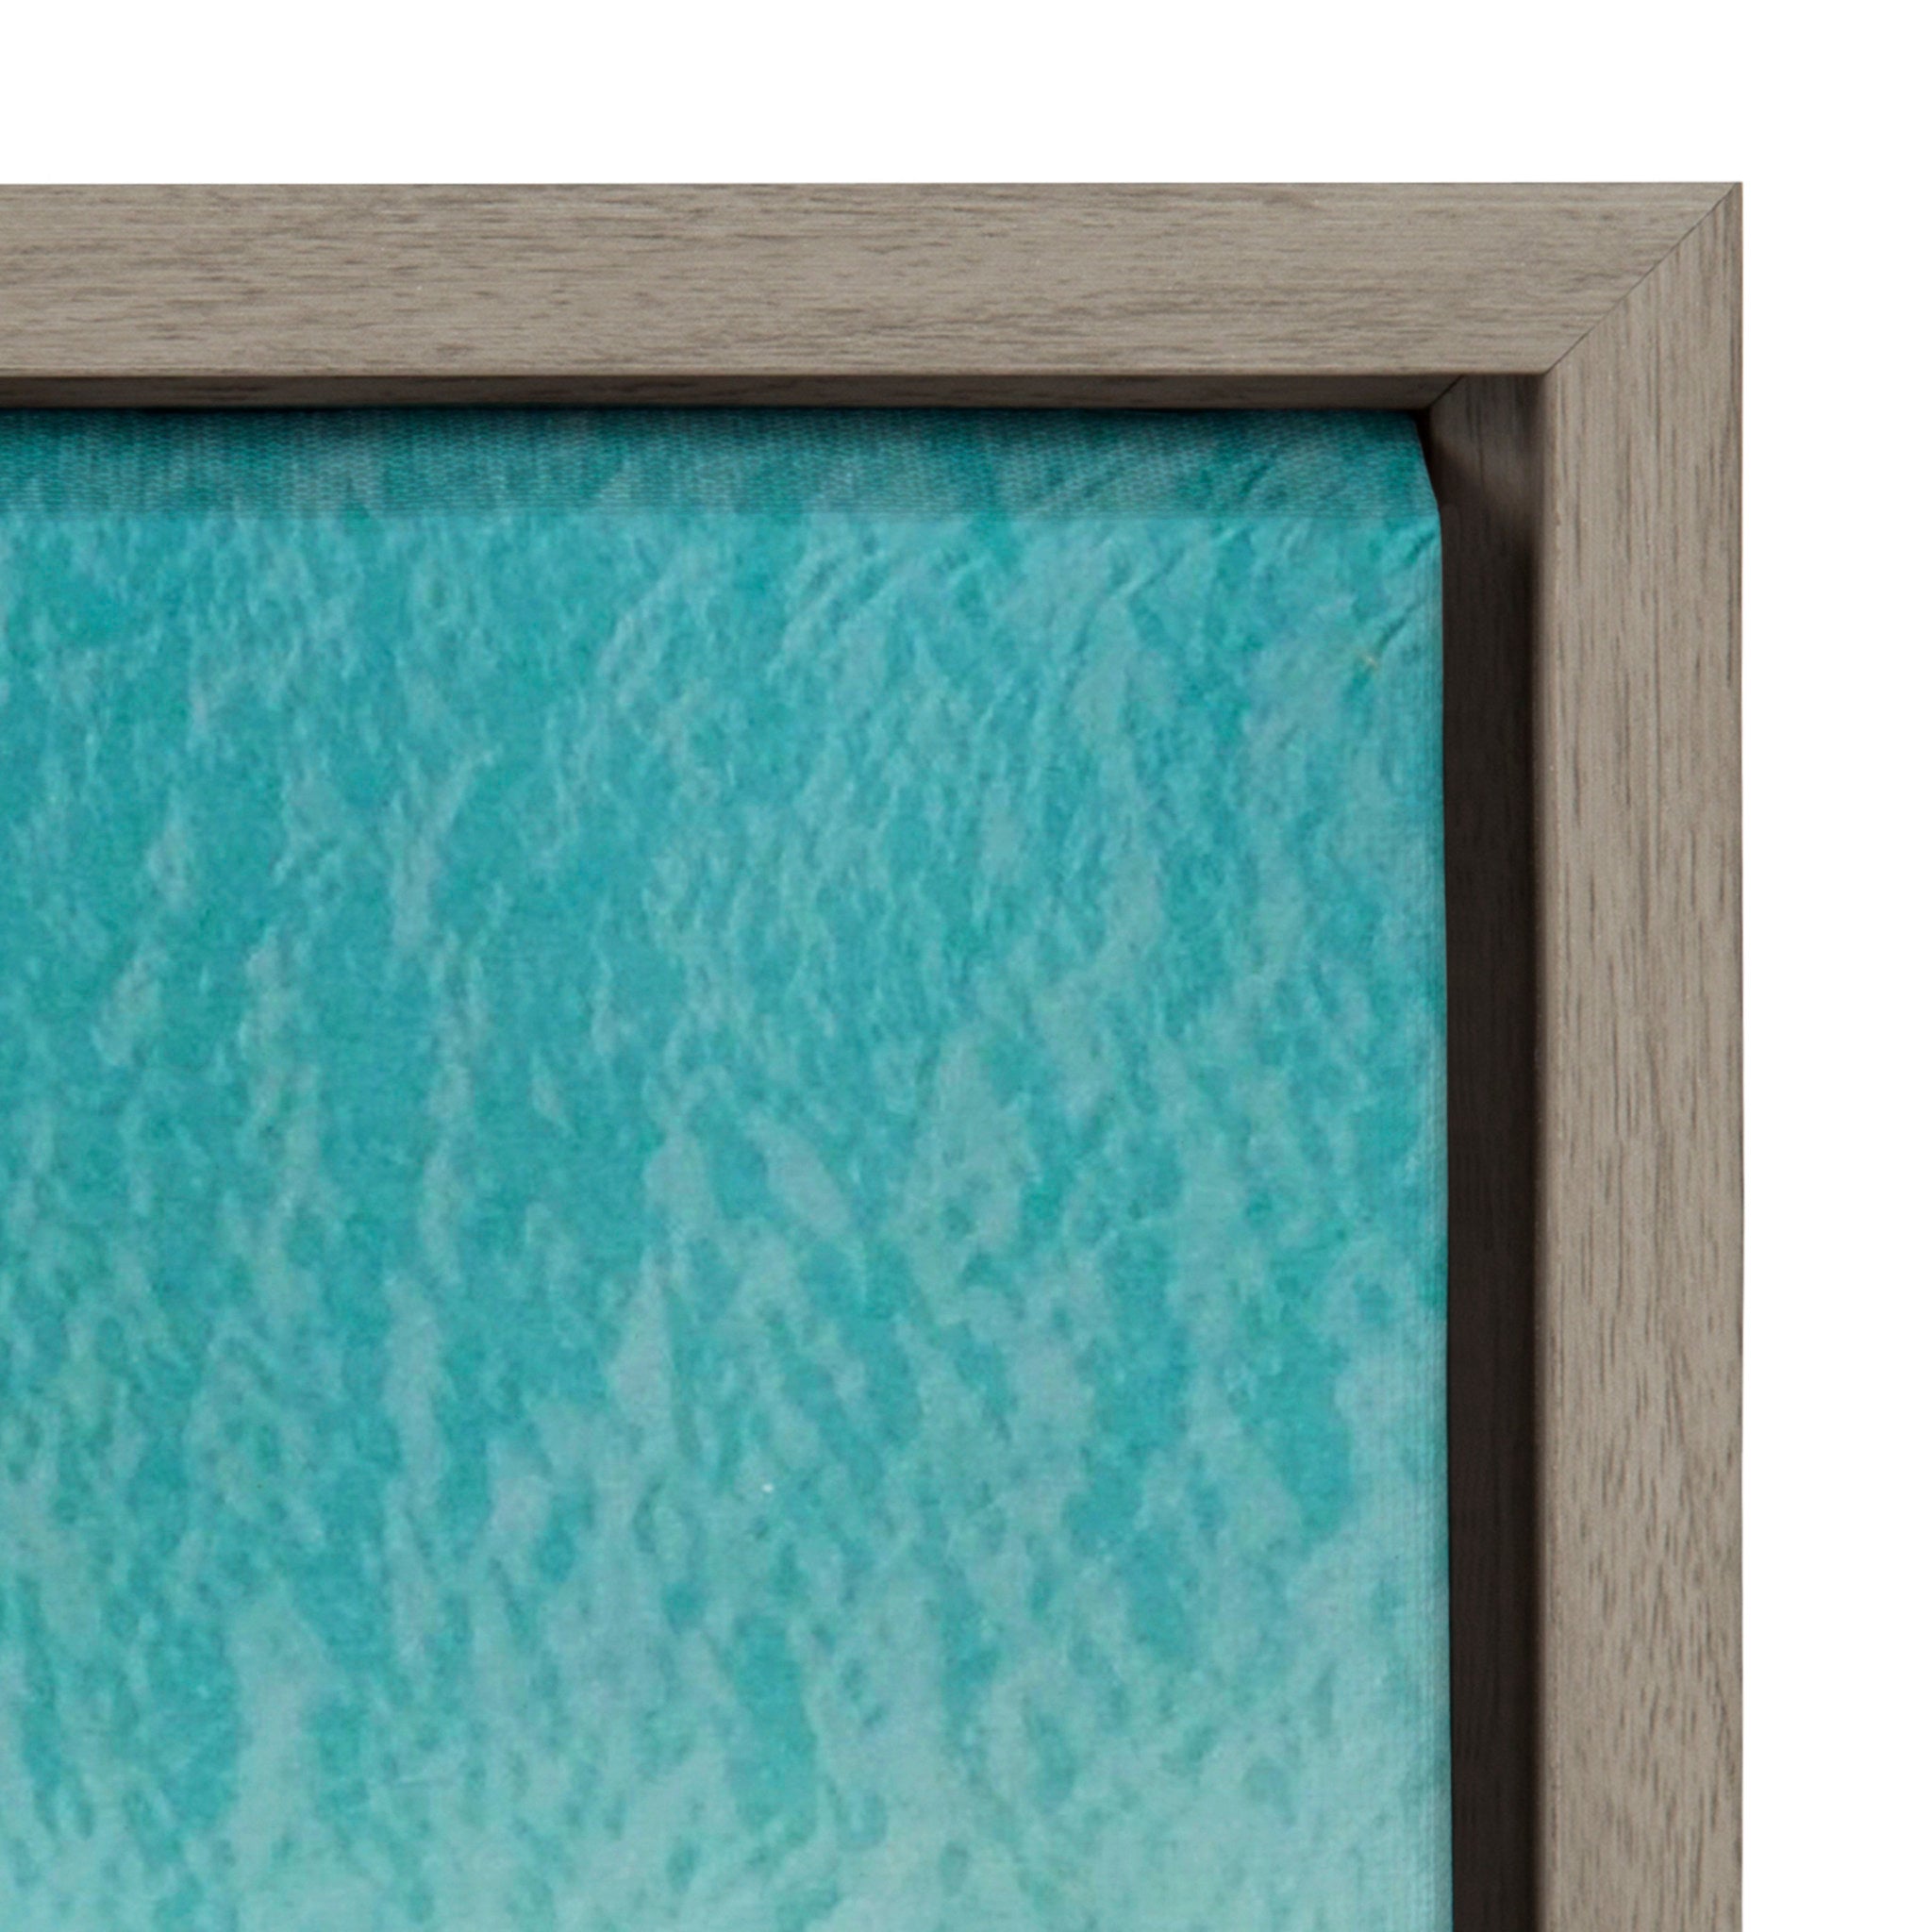 Sylvie Monterosso 6 Framed Canvas Set by Rachel Bolgov